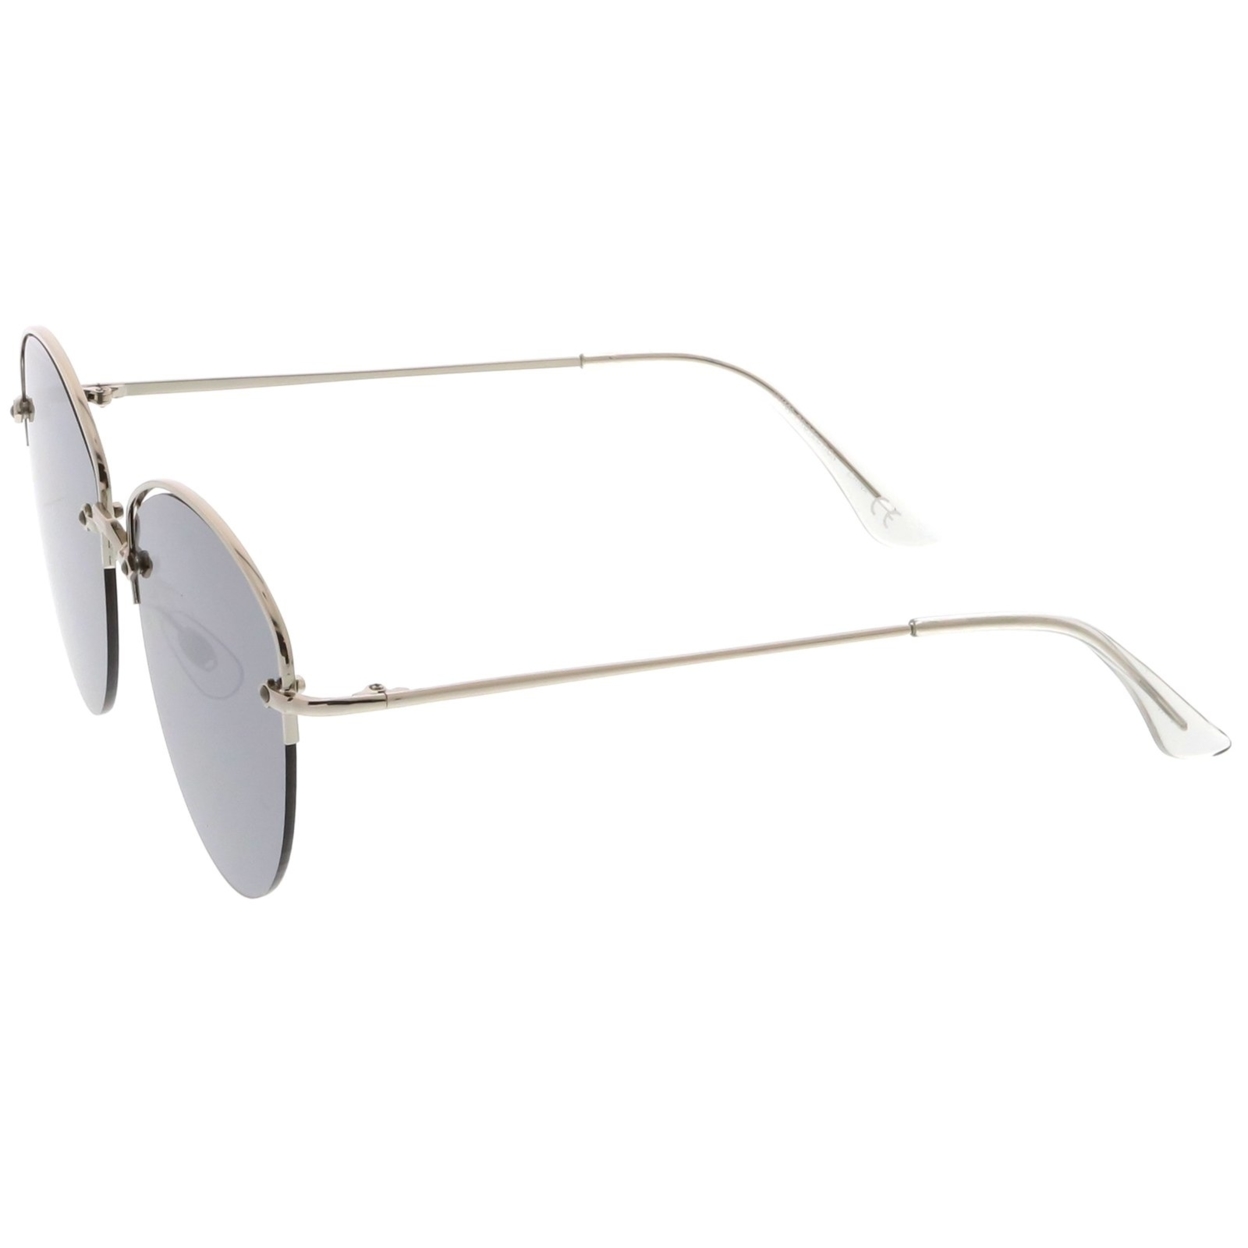 Modern Metal Nose Bridge Mirrored Flat Lens Semi-Rimless Sunglasses 60mm - Gold / Blue Mirror